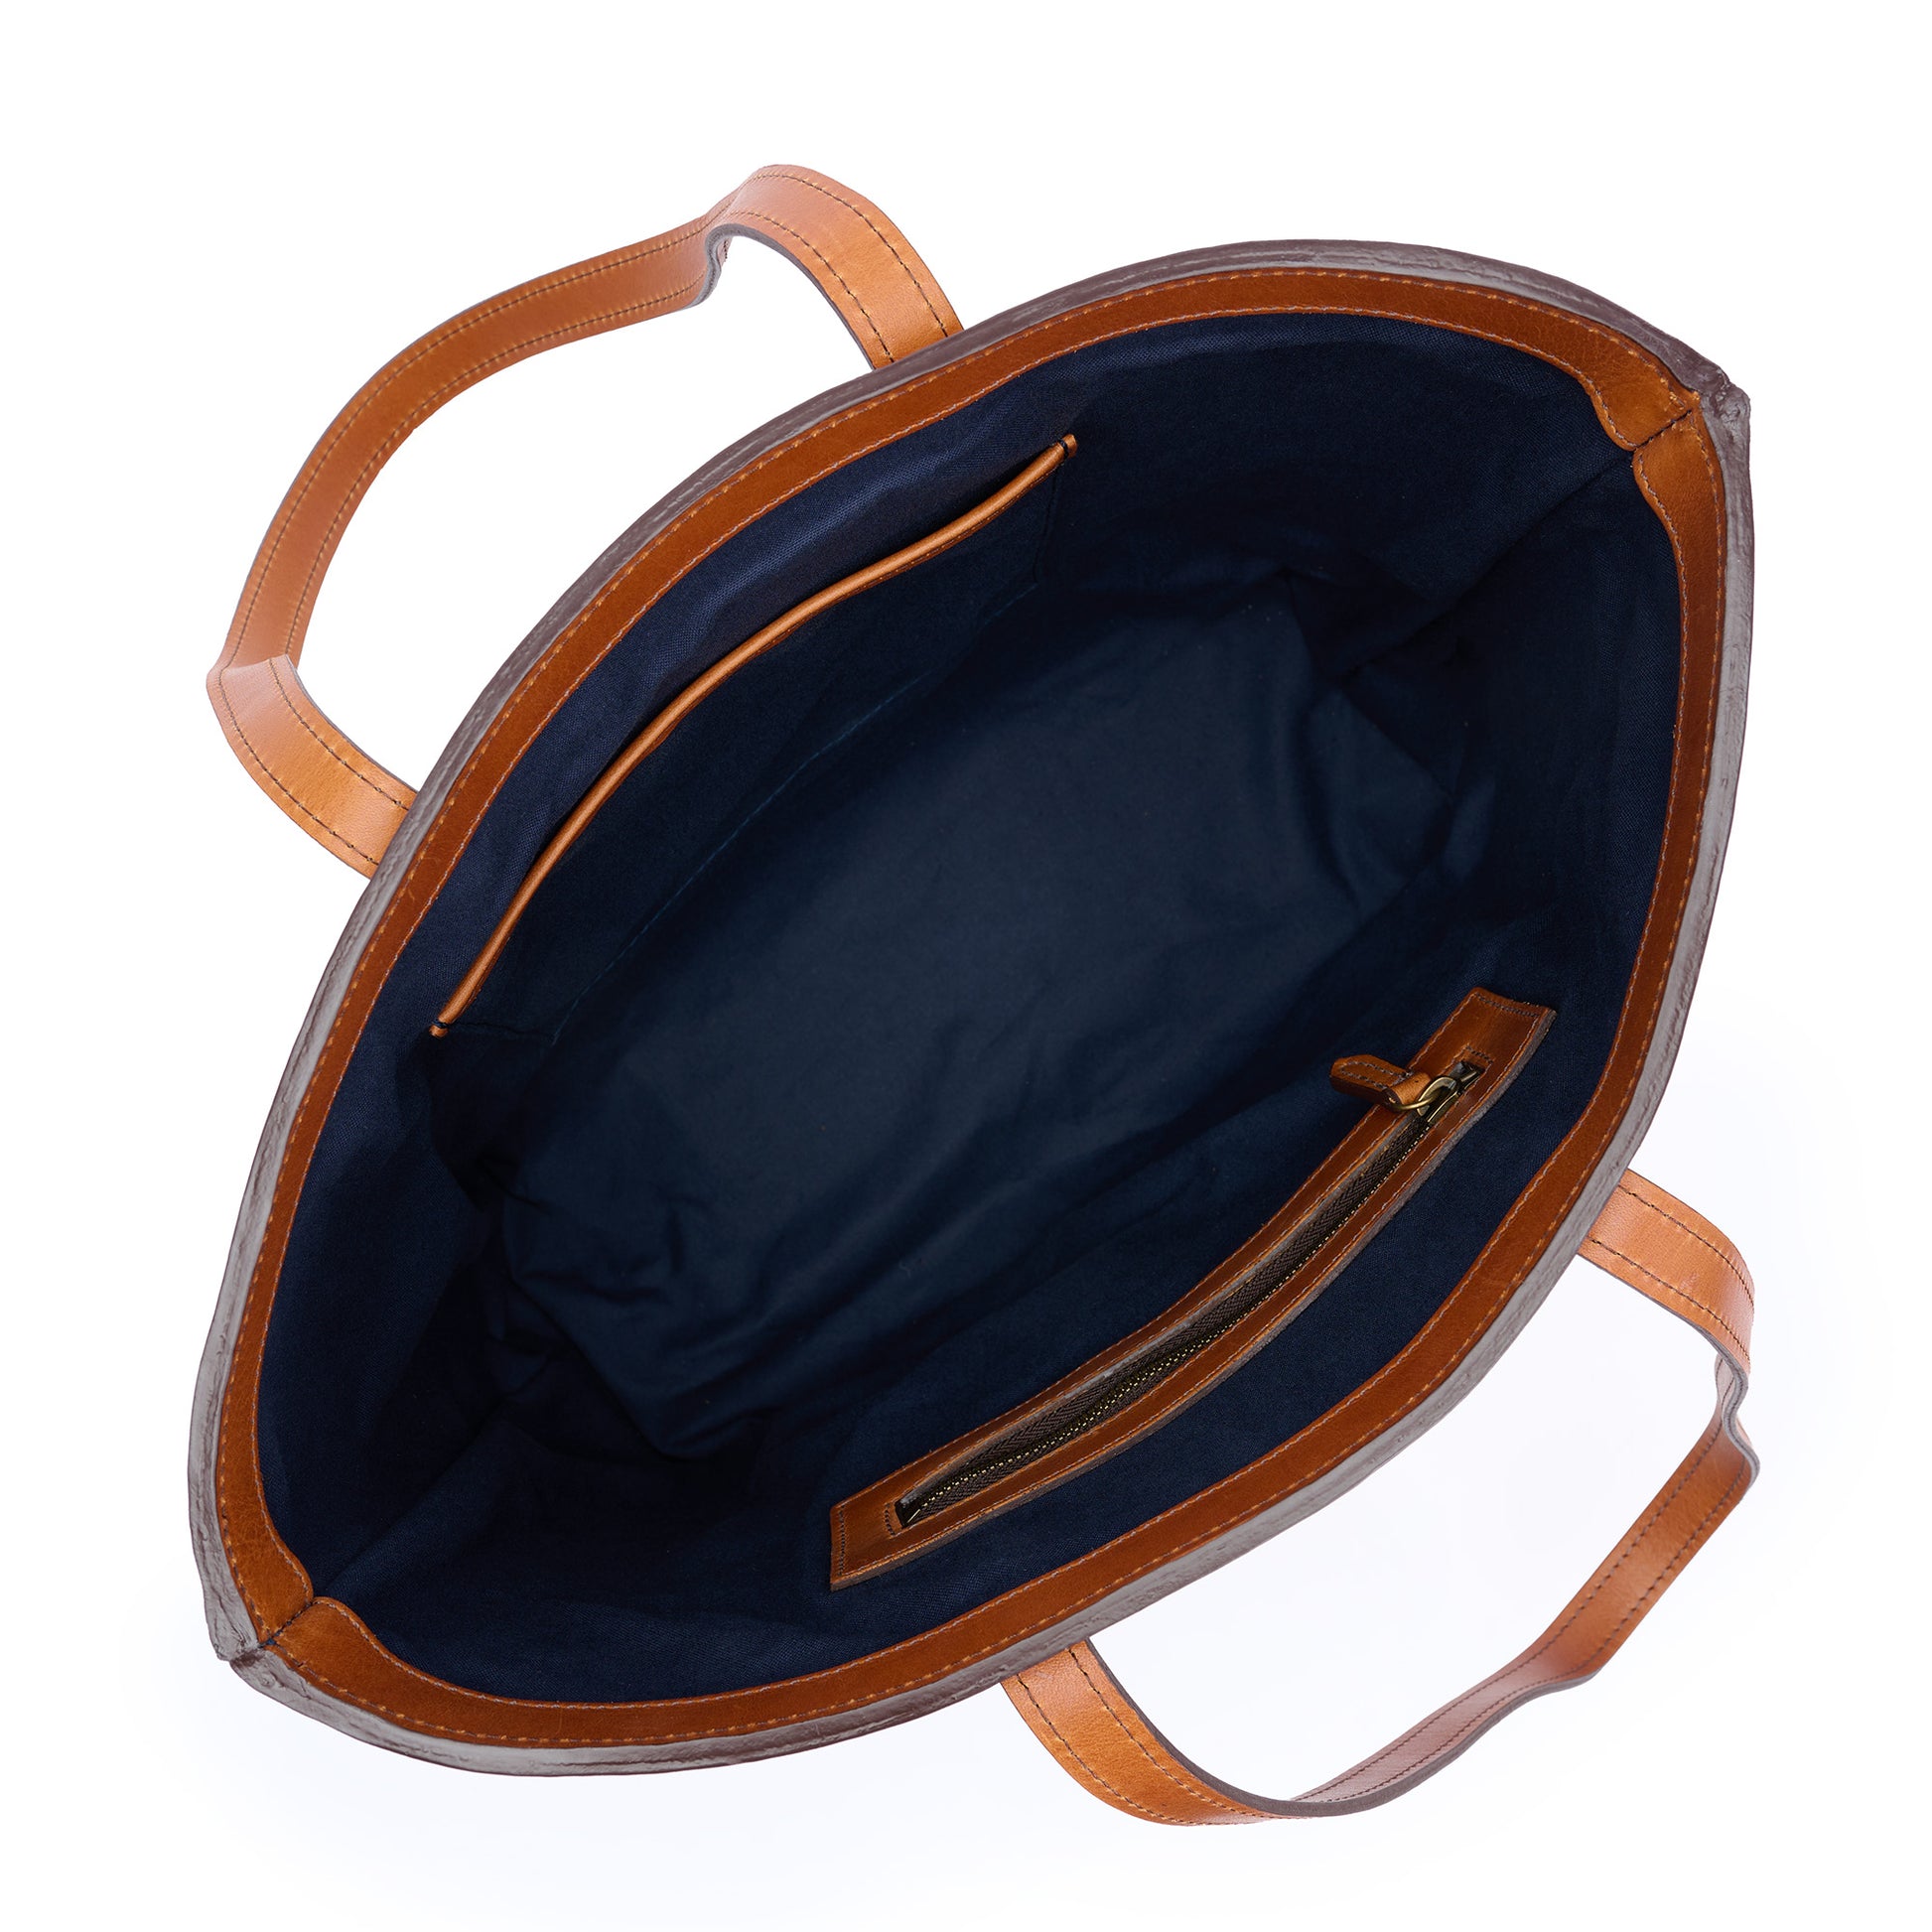 inside saddle tan leather tote bag by Jackson Wayne - saddle tan leather with blue canvas lining